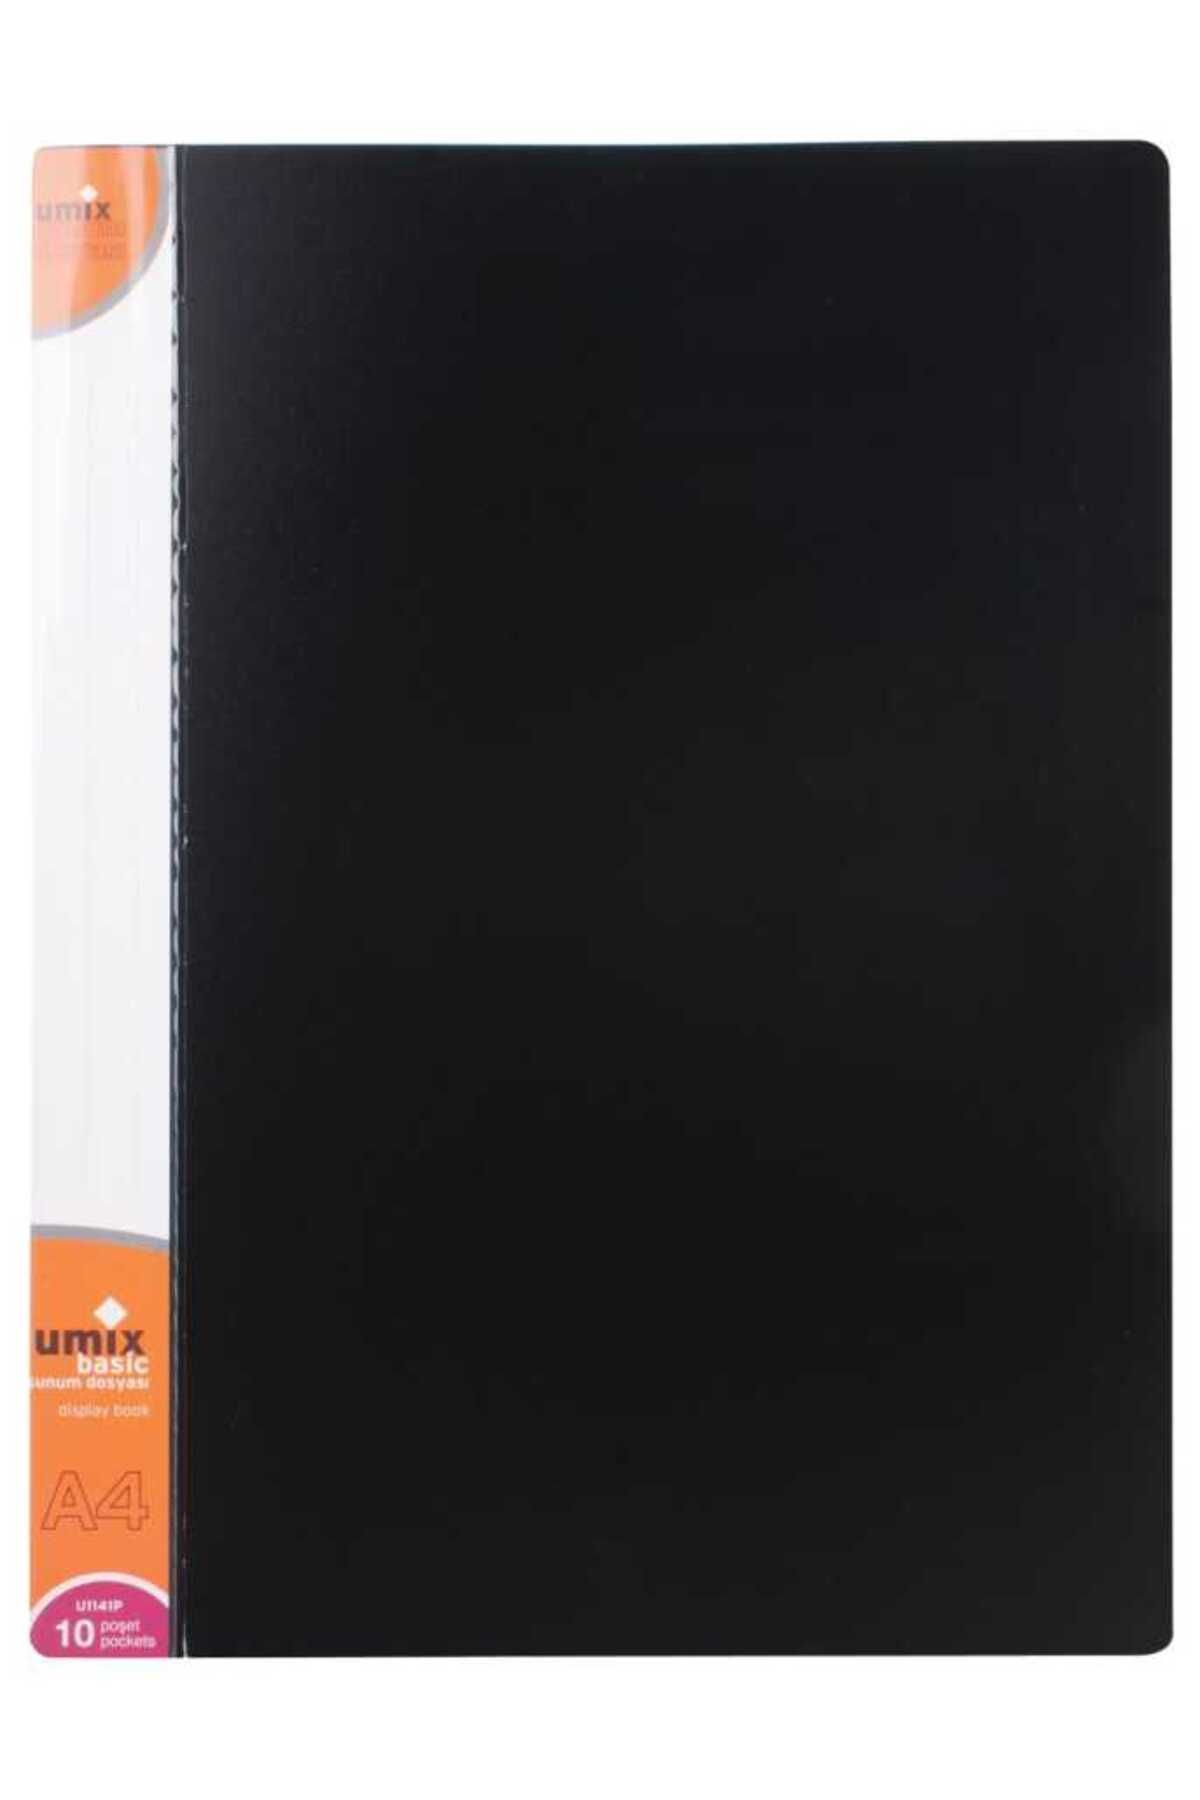 Umix U1141 10 Yaprak Siyah Sunum Dosyası